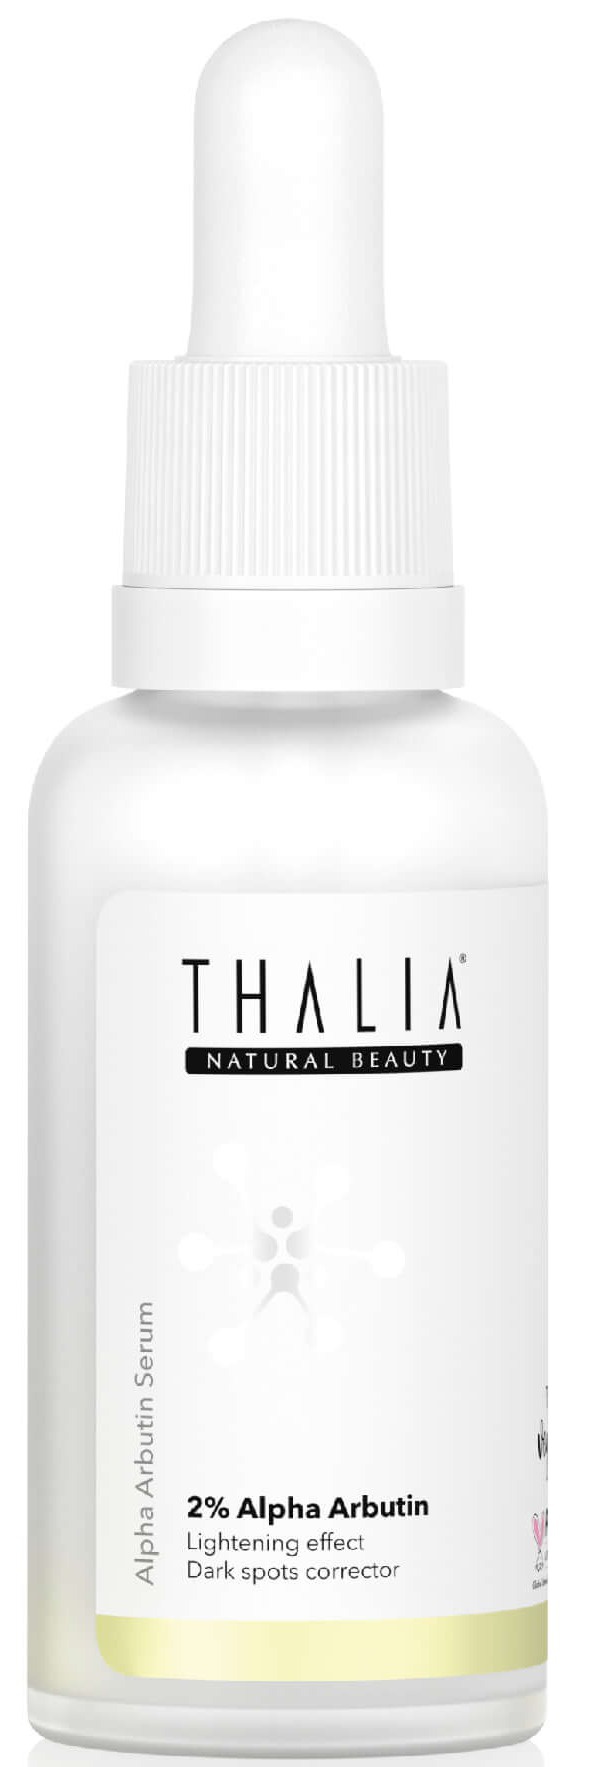 Thalia Natural Beauty 2% Alpha Arbutin Serum